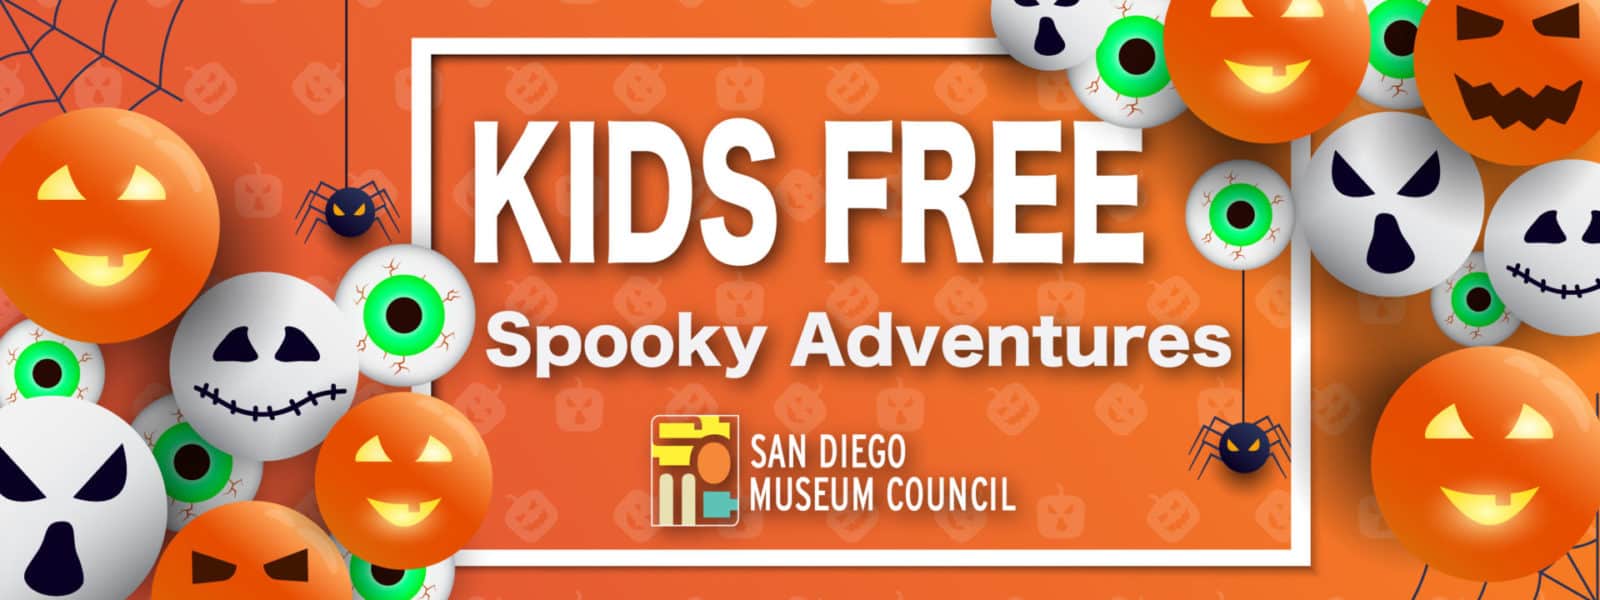 Kids Free Spooky Adventures